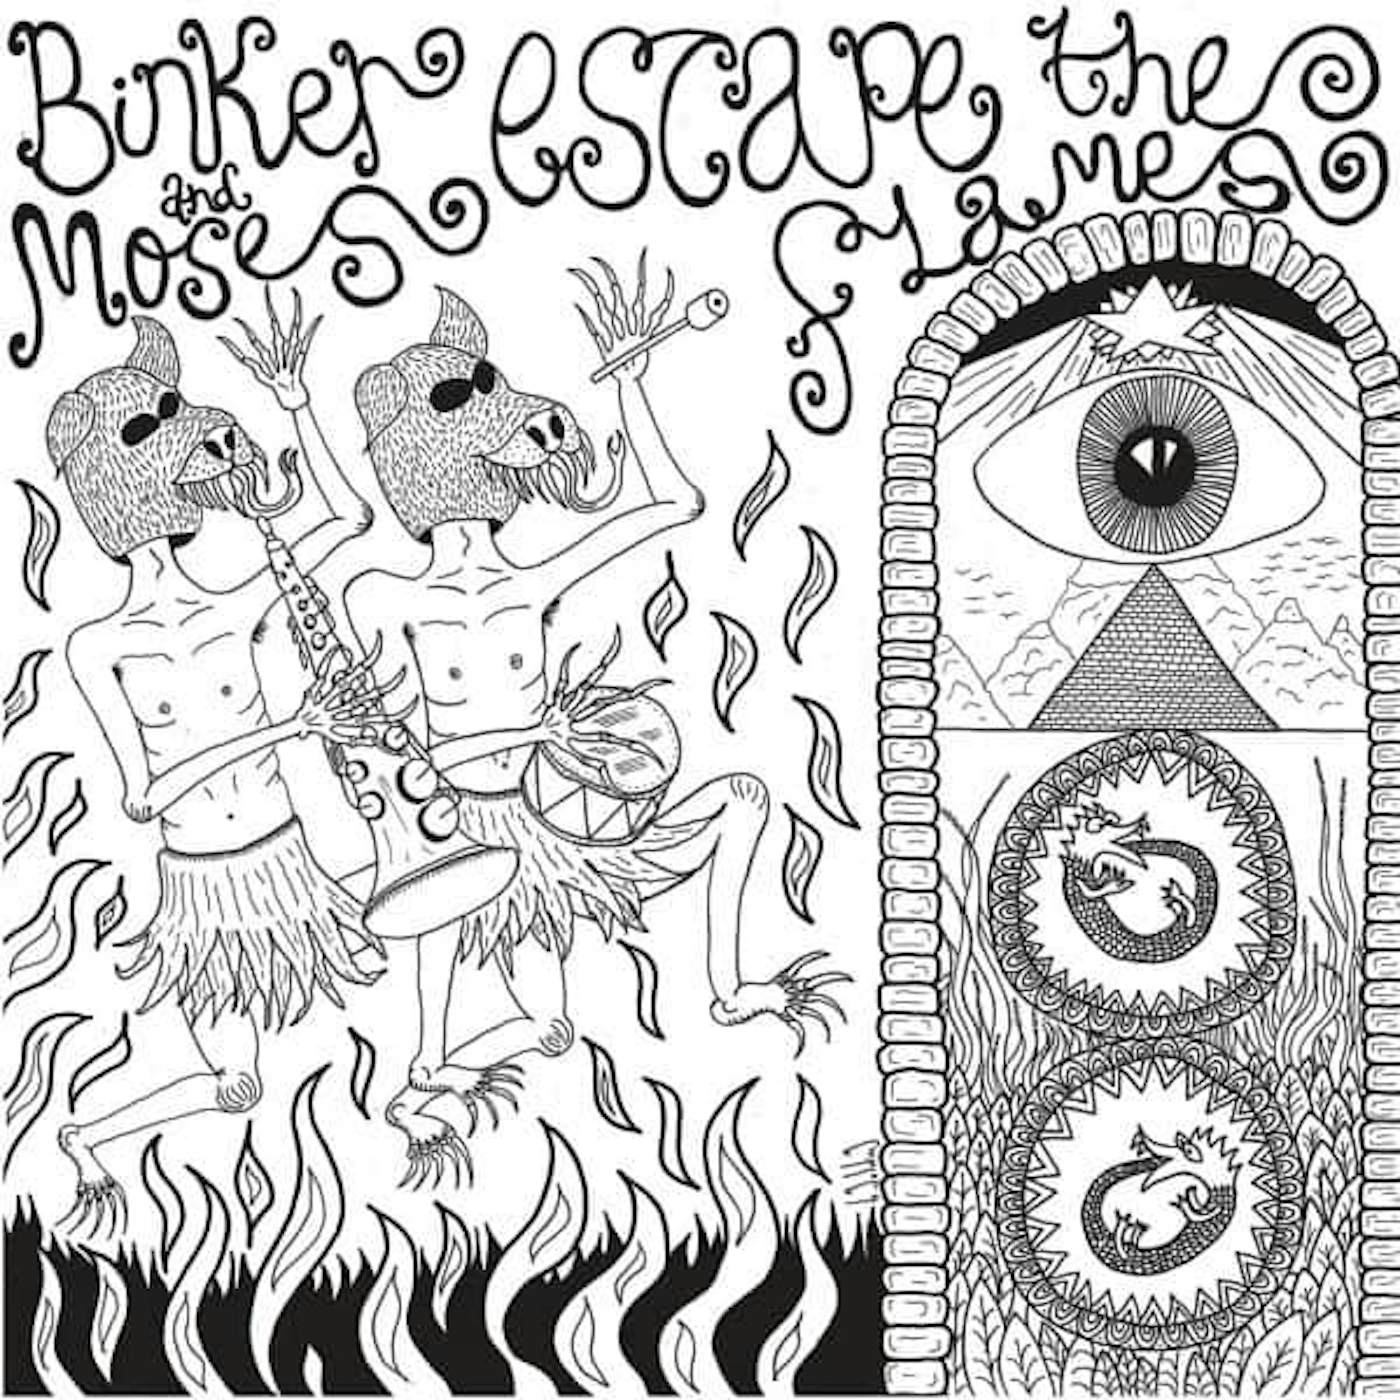 Binker and Moses ESCAPE THE FLAMES Vinyl Record